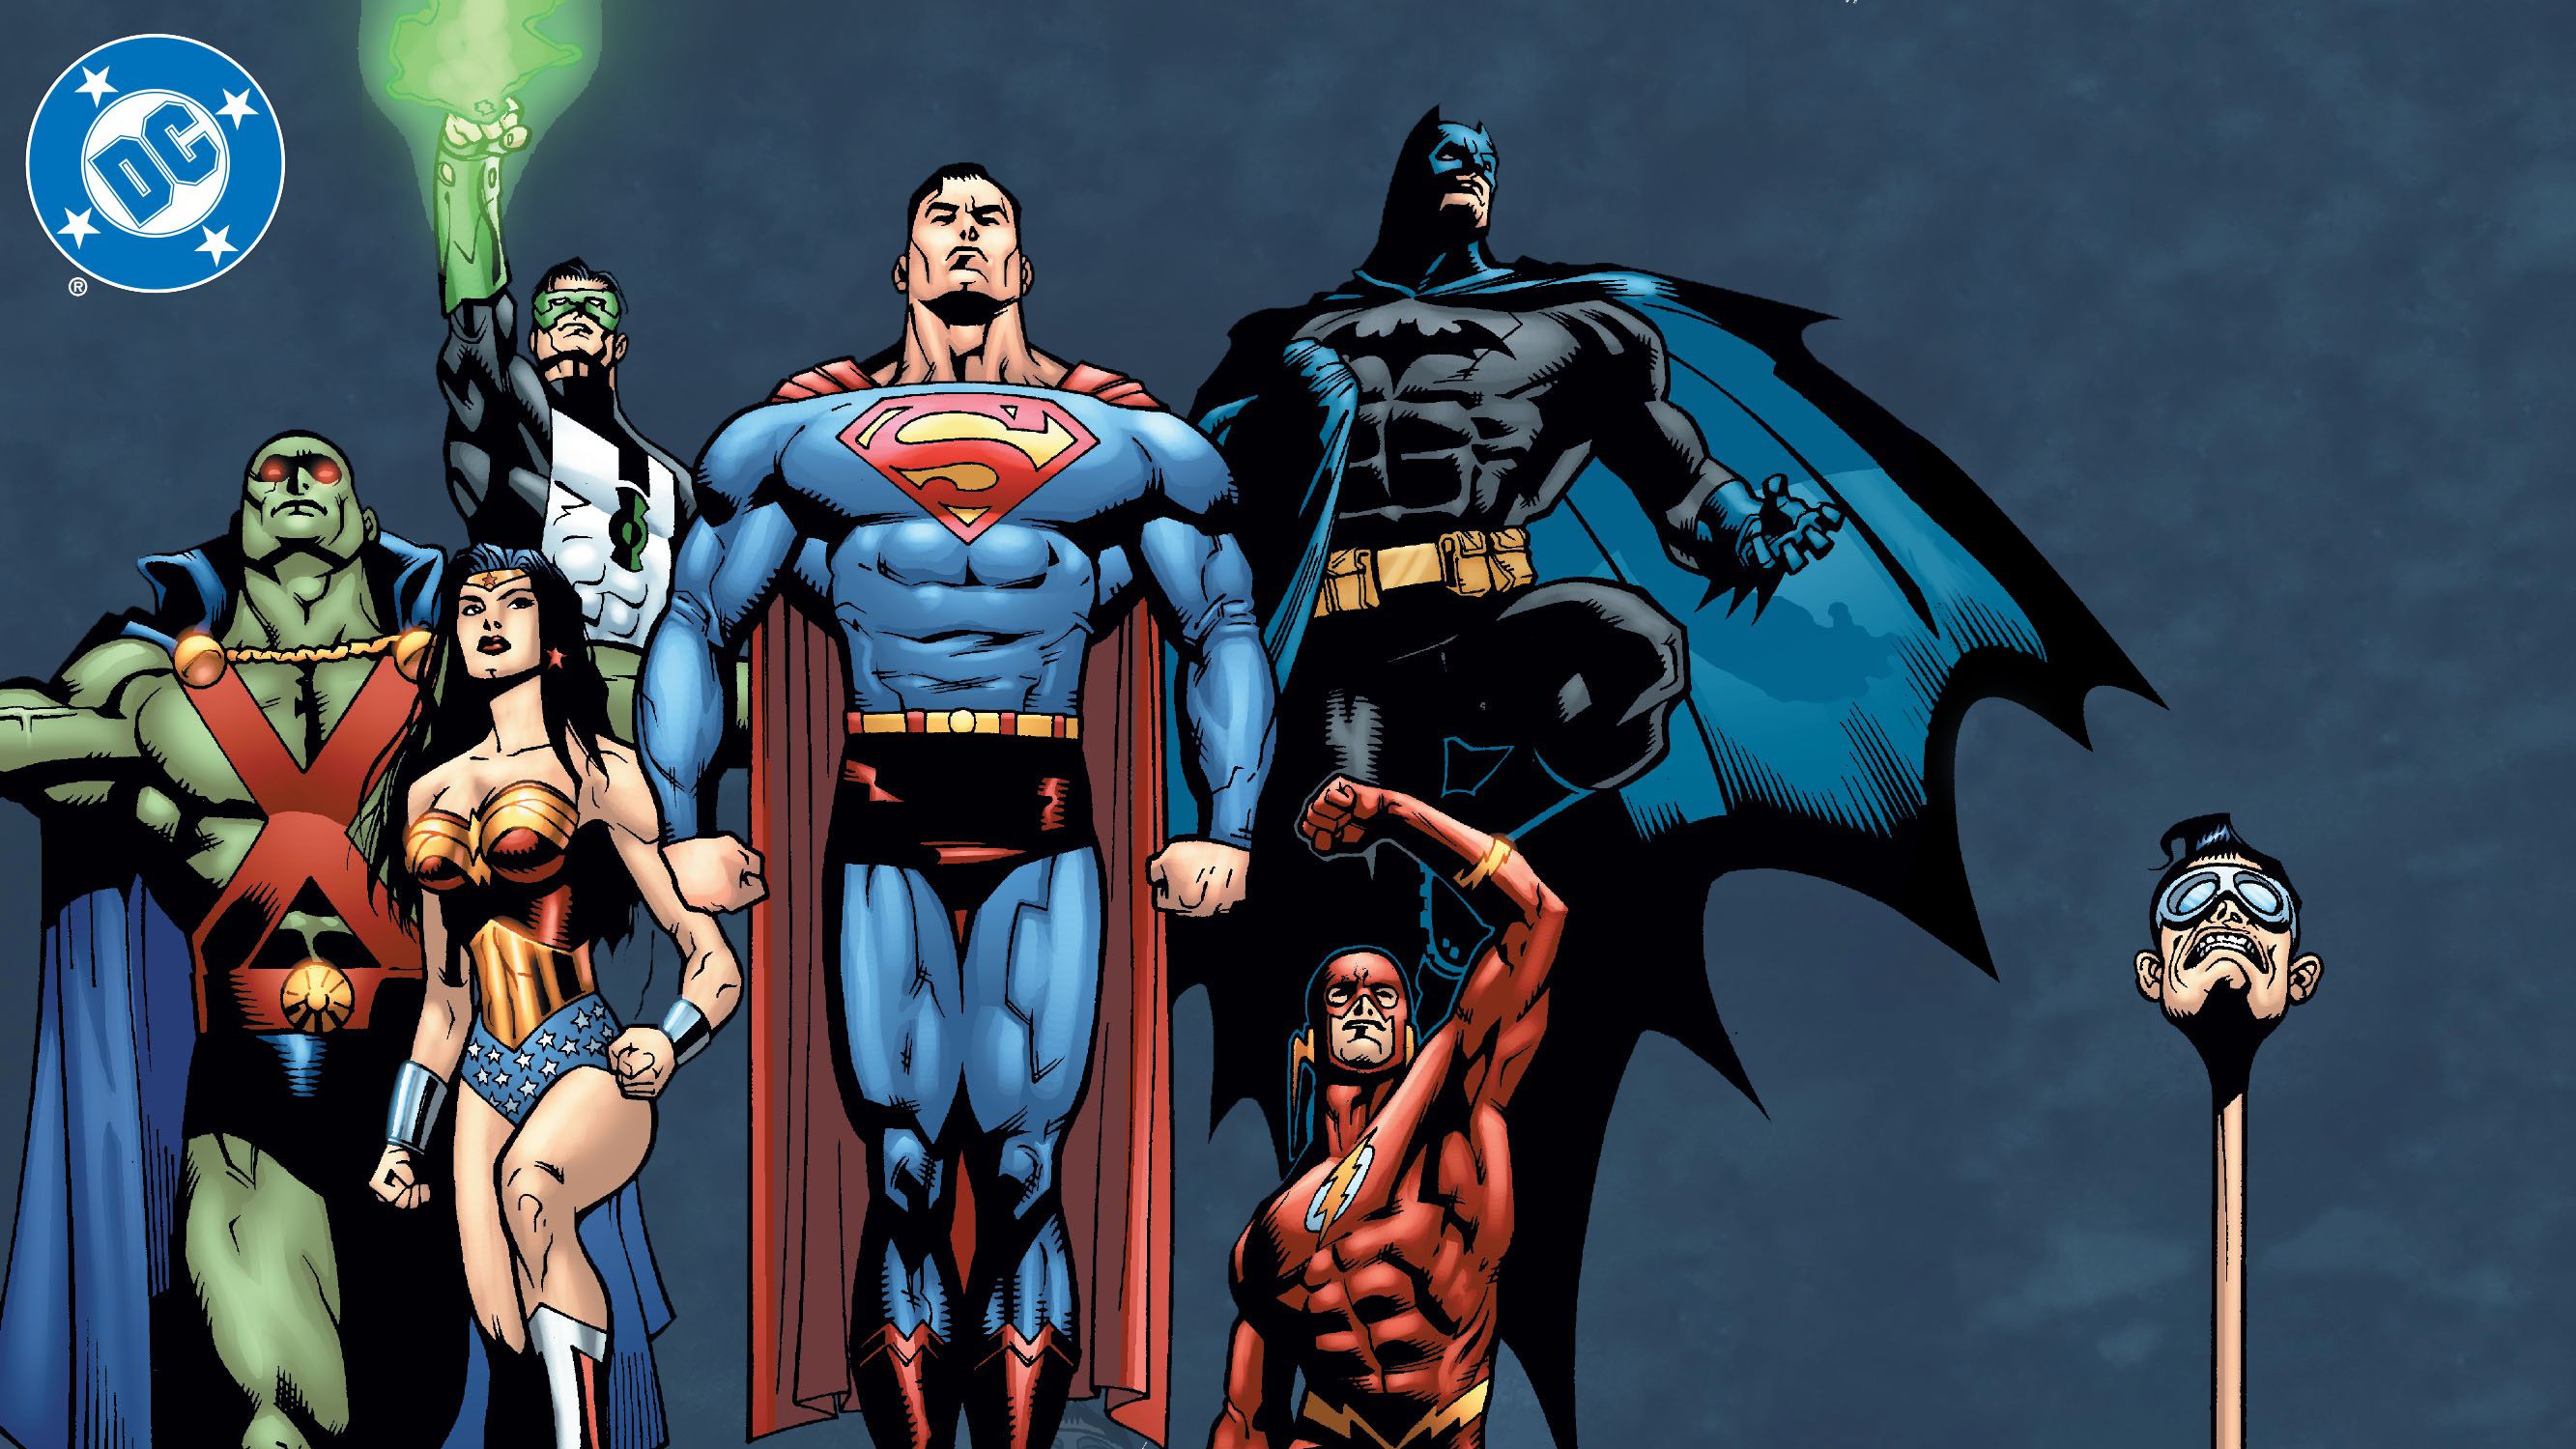 comics, justice league, batman, dc comics, flash, green lantern, kyle rayner, martian manhunter, plastic man, superman, wally west, wonder woman